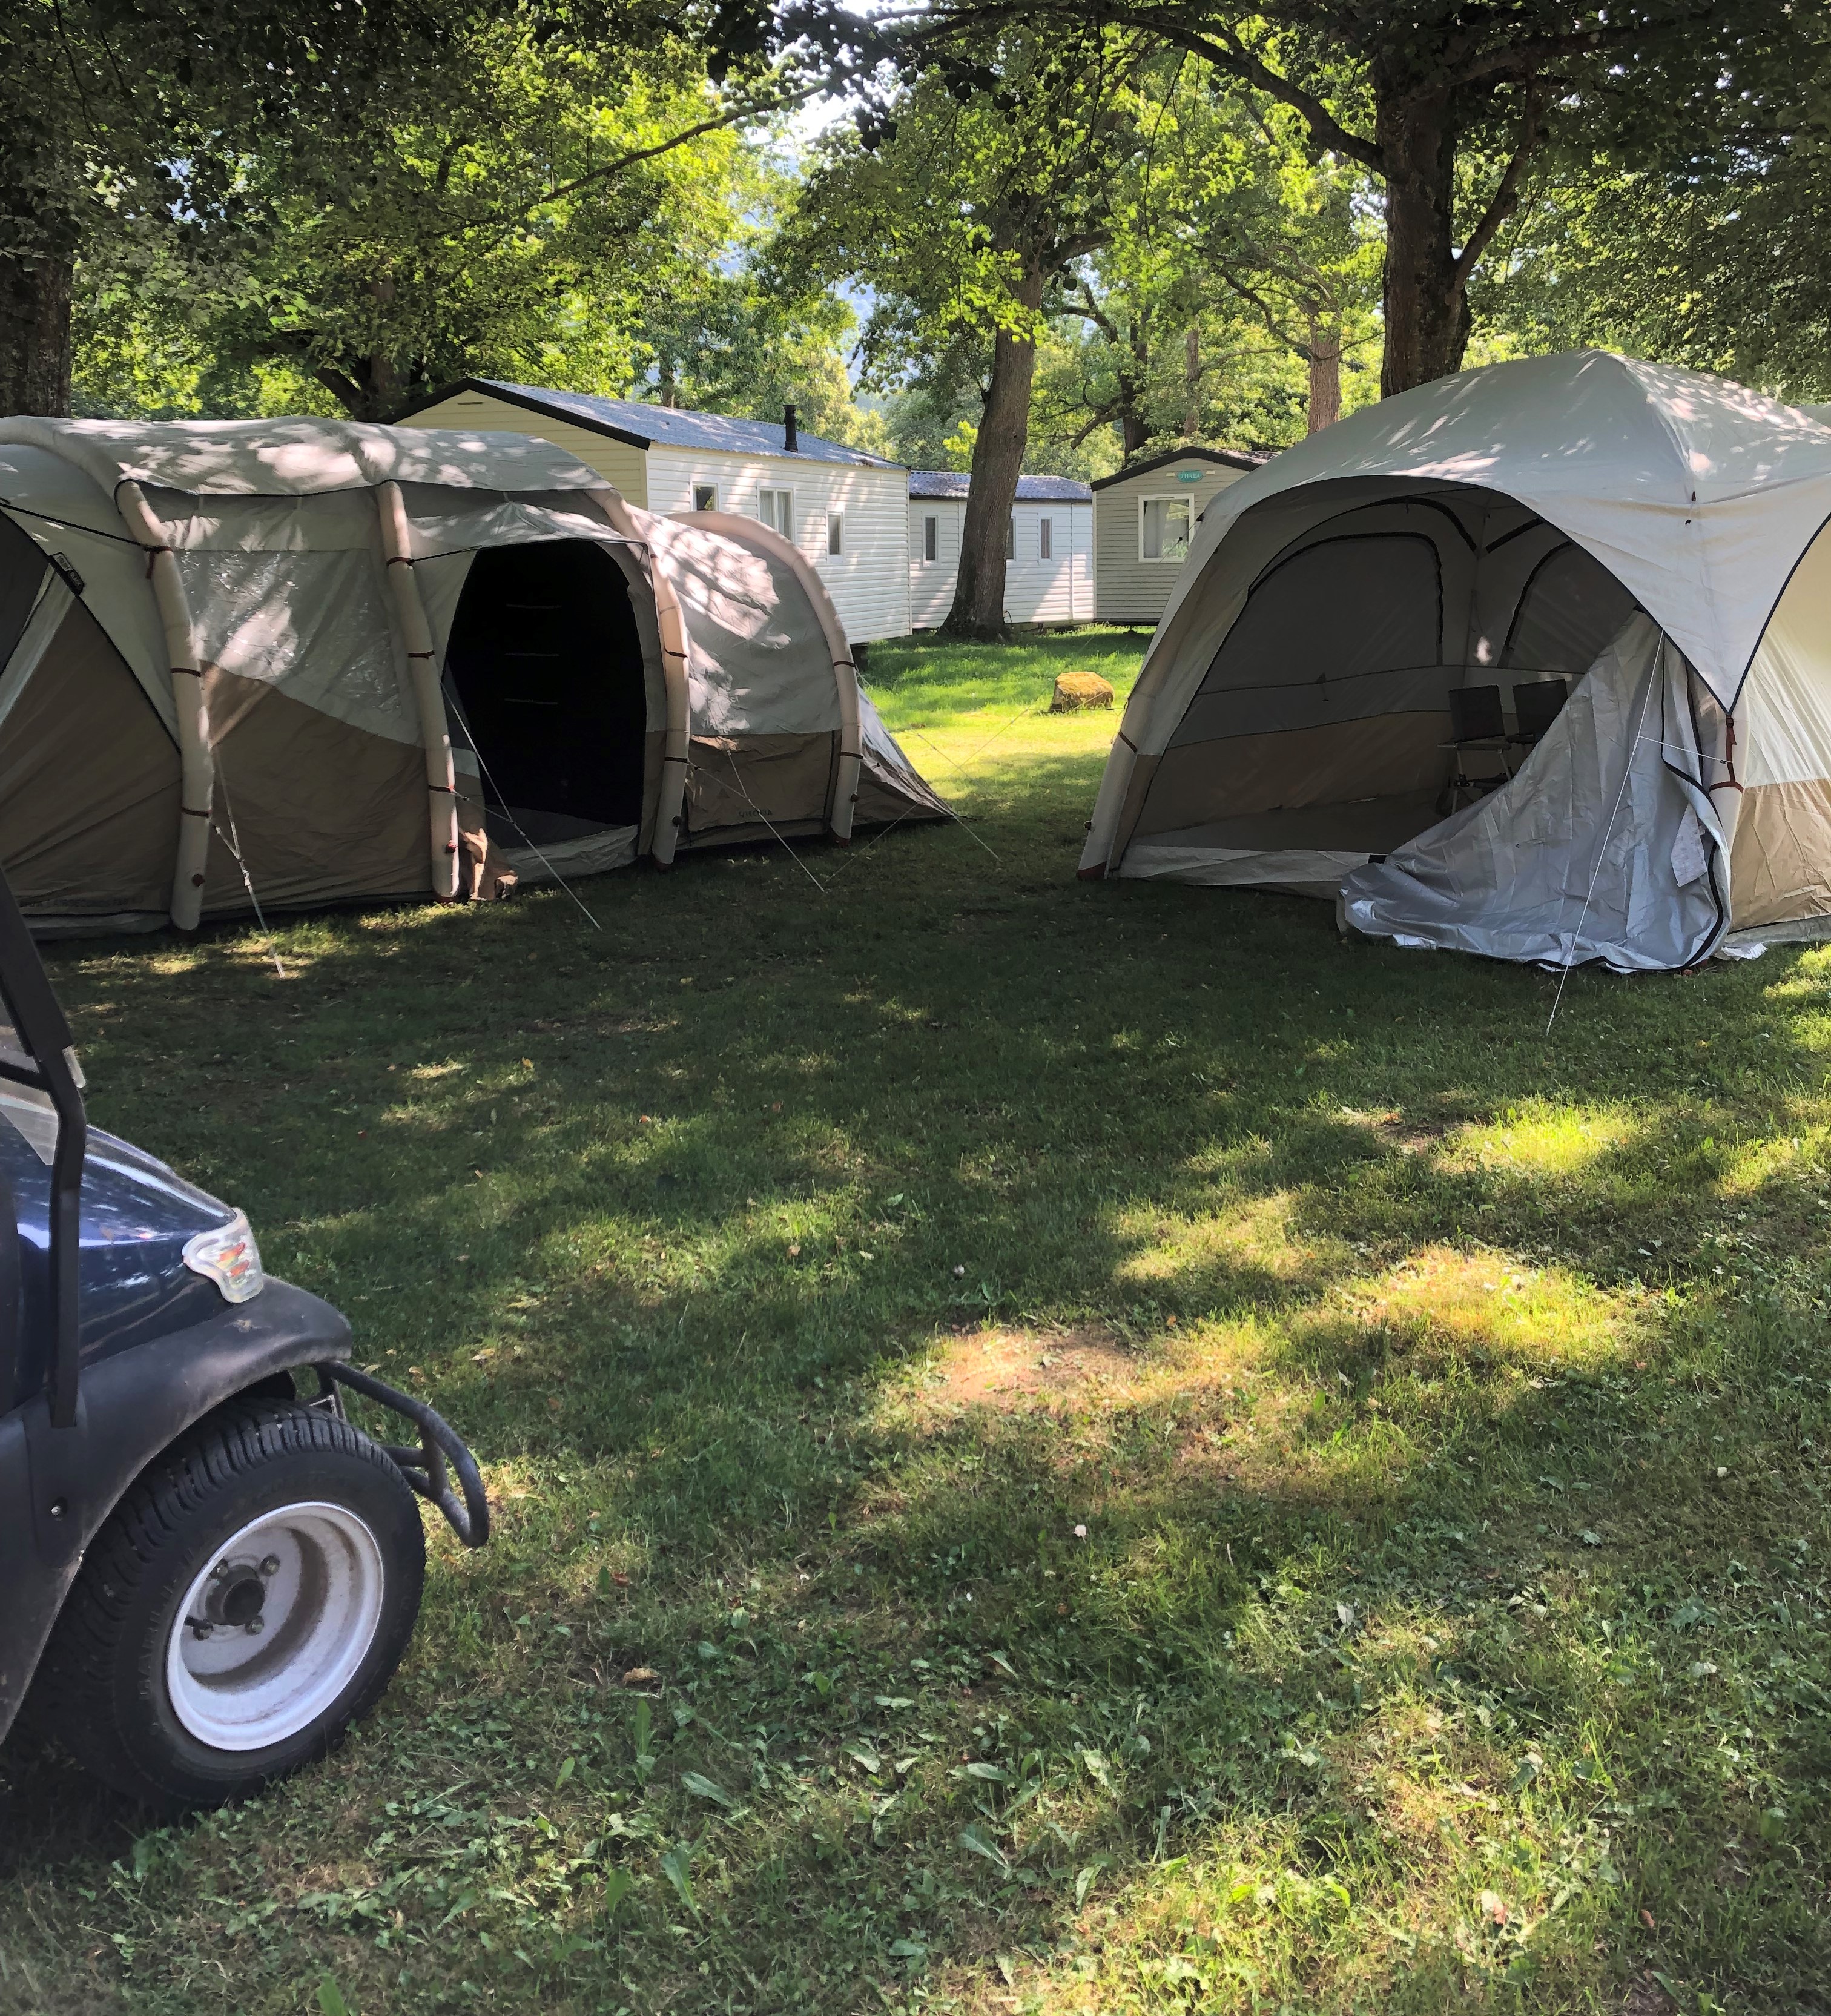 Accommodation - Le Pret A Camper 6 Personnes - Camping A l'Ombre des Tilleuls